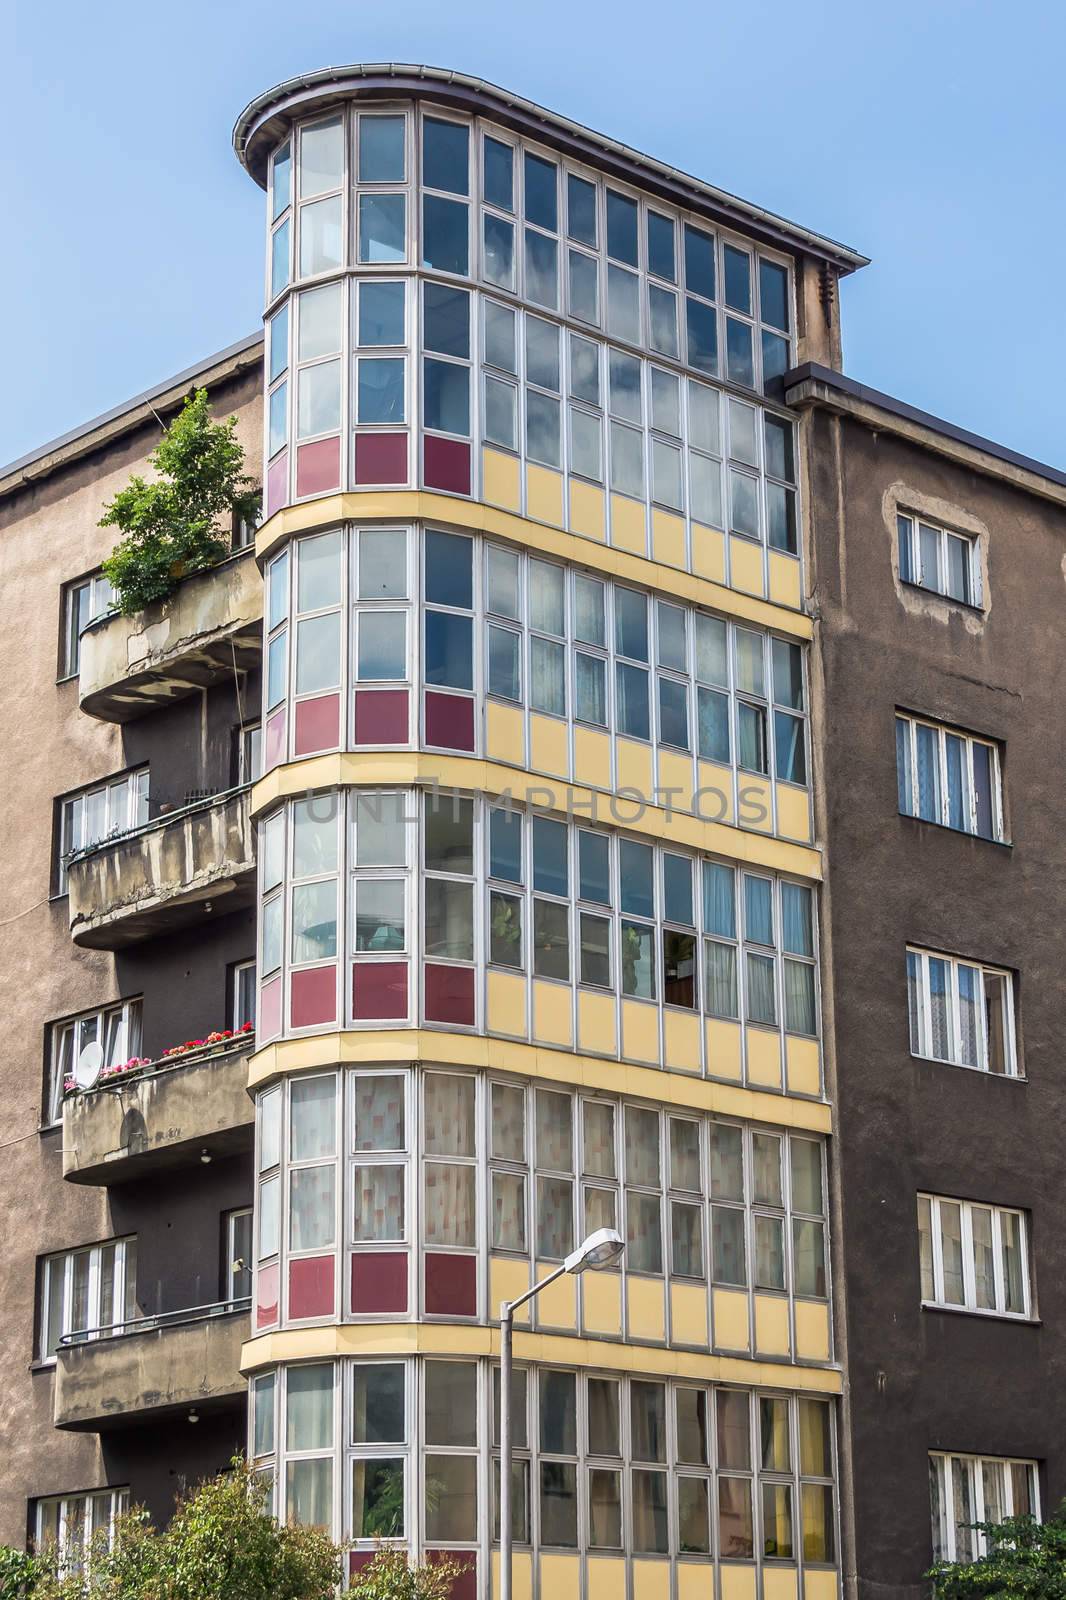 Architectural functionalism style by pawel_szczepanski